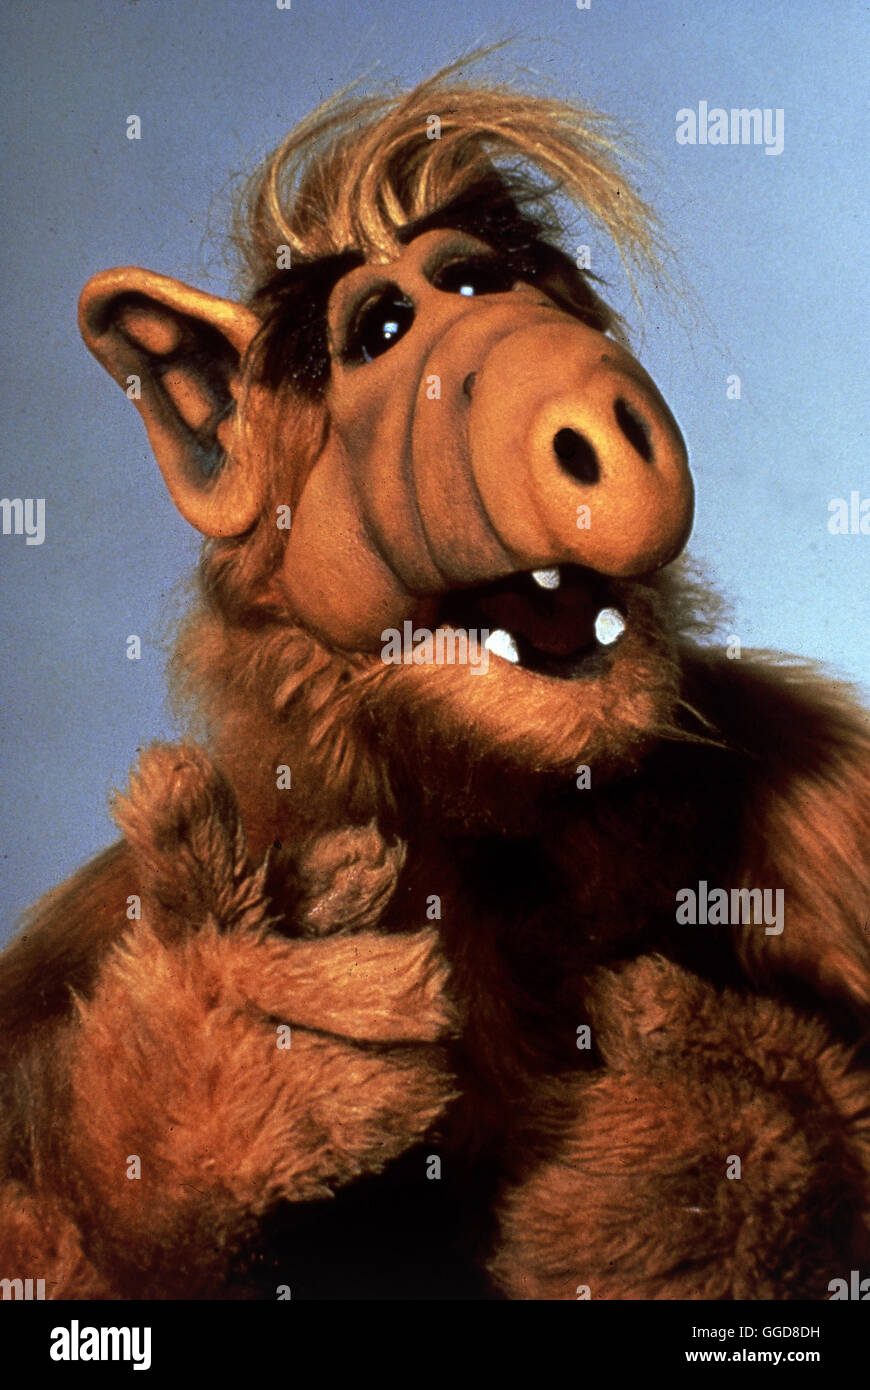 ALF / Alf - Auf Verbrecherjagd, Teil 2 USA 1987 / Gary Shimokawa ALF auf Verbrecherjagd Regie: Gary Shimokawa aka. Alf - Auf Verbrecherjagd, Teil 2 Stock Photo